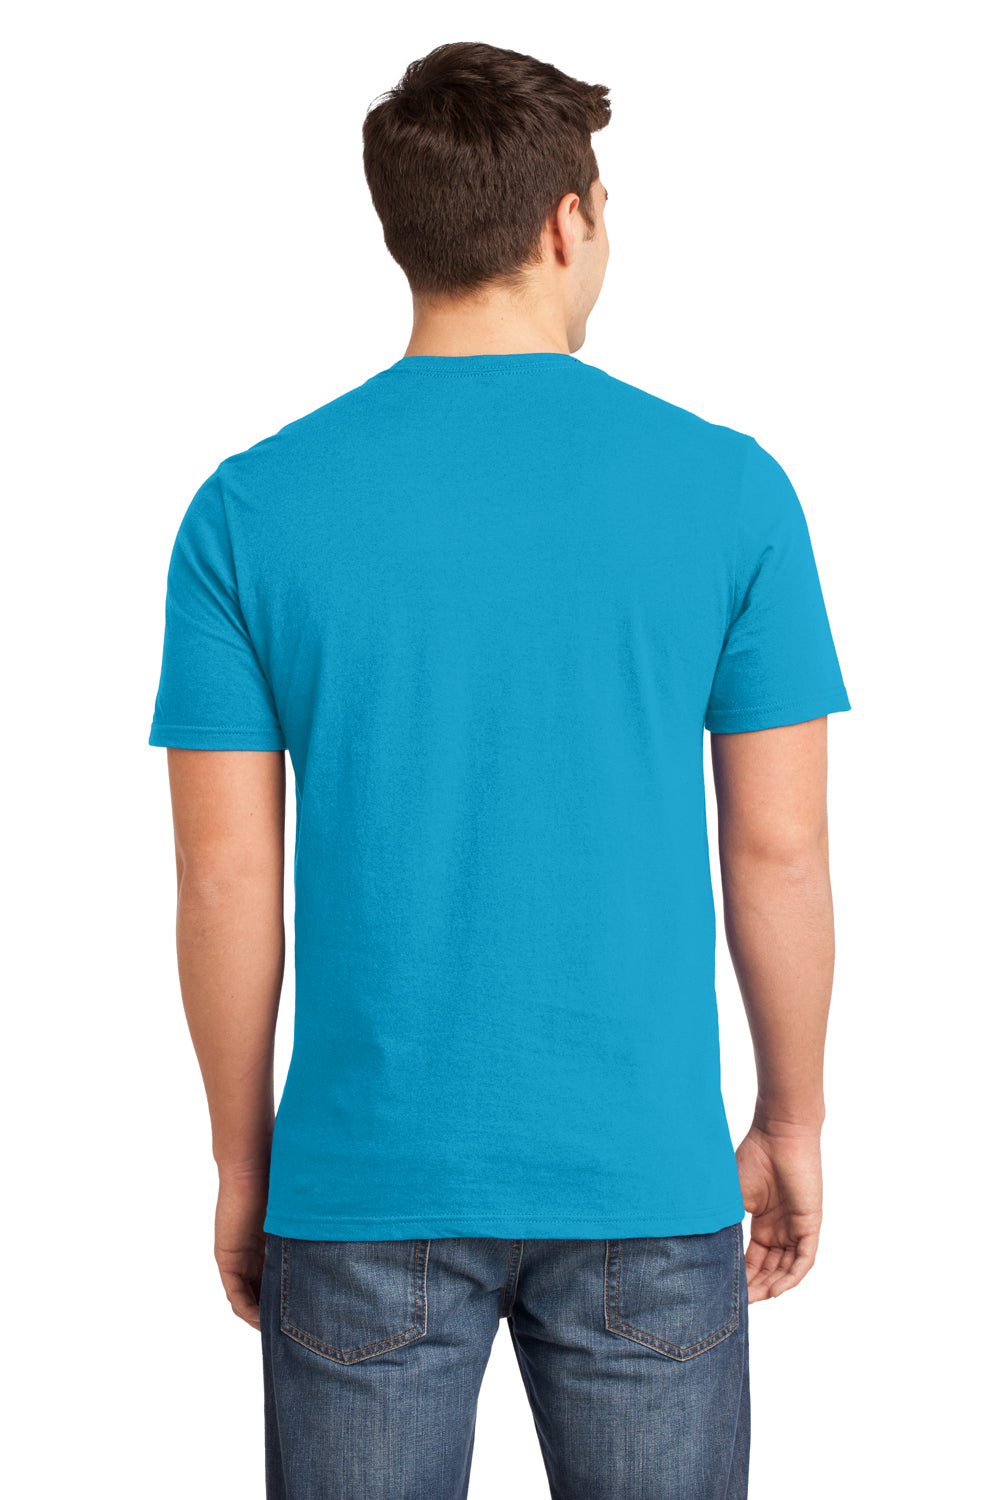 District DT6000 Mens Very Important Short Sleeve Crewneck T-Shirt Light Turquoise Blue Back